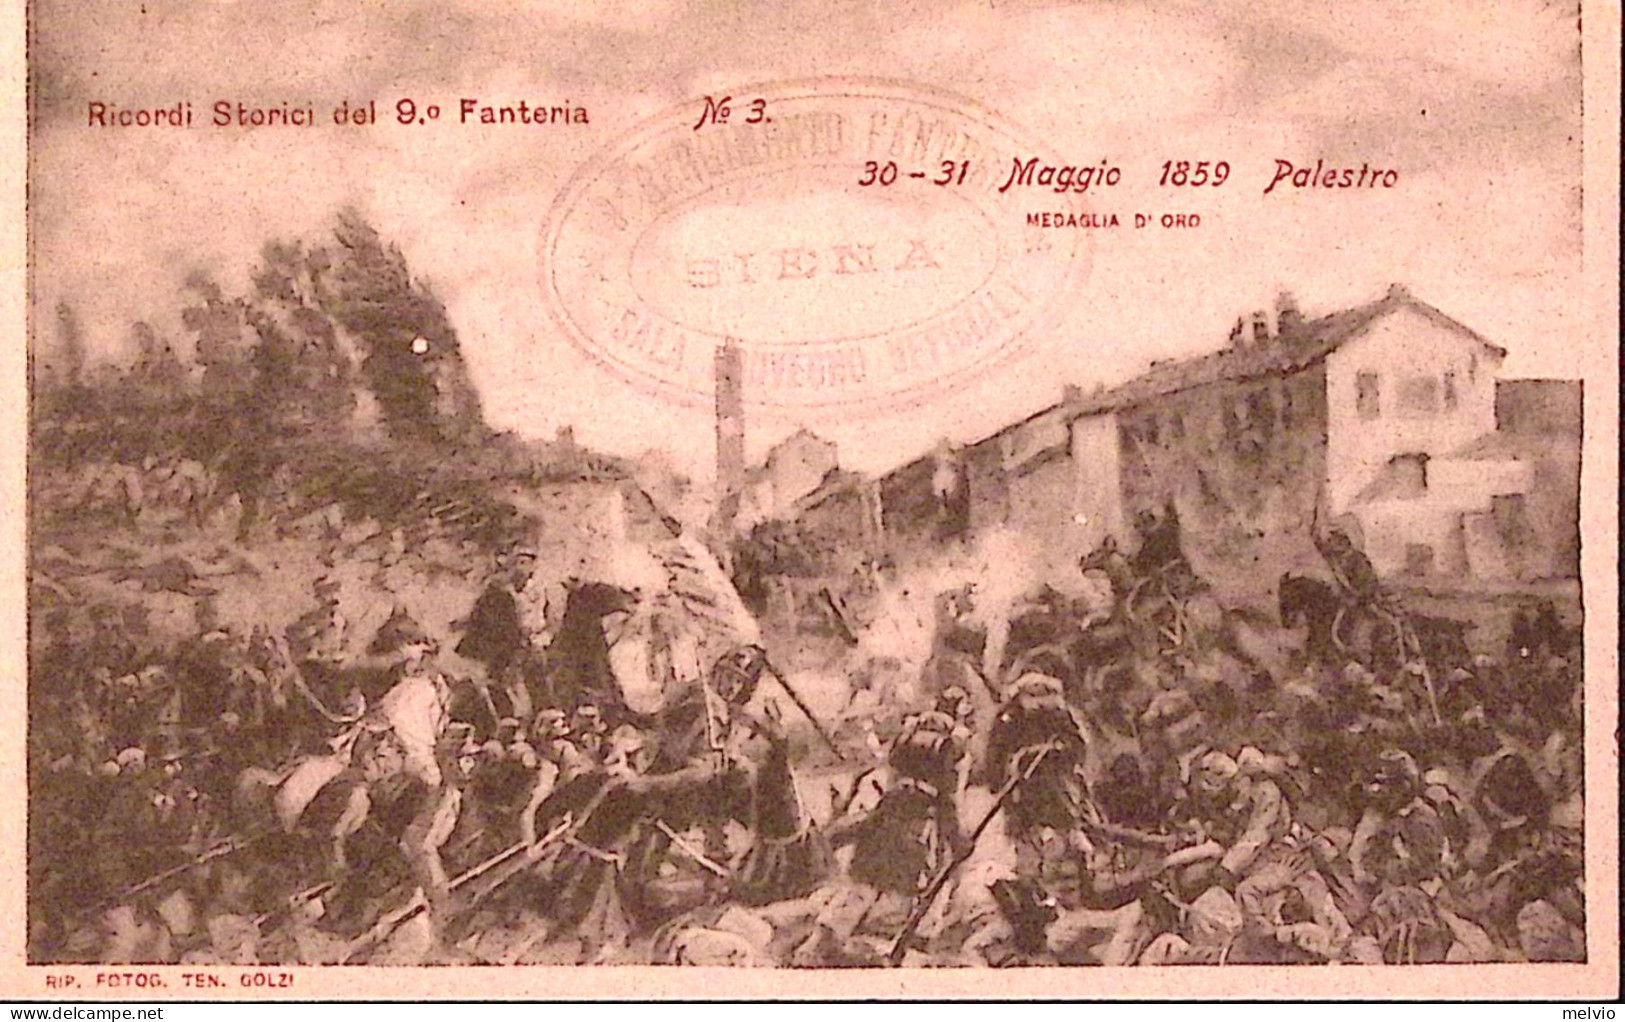 1905-9 REGGIMENTO FANTERIA Nuova - Régiments